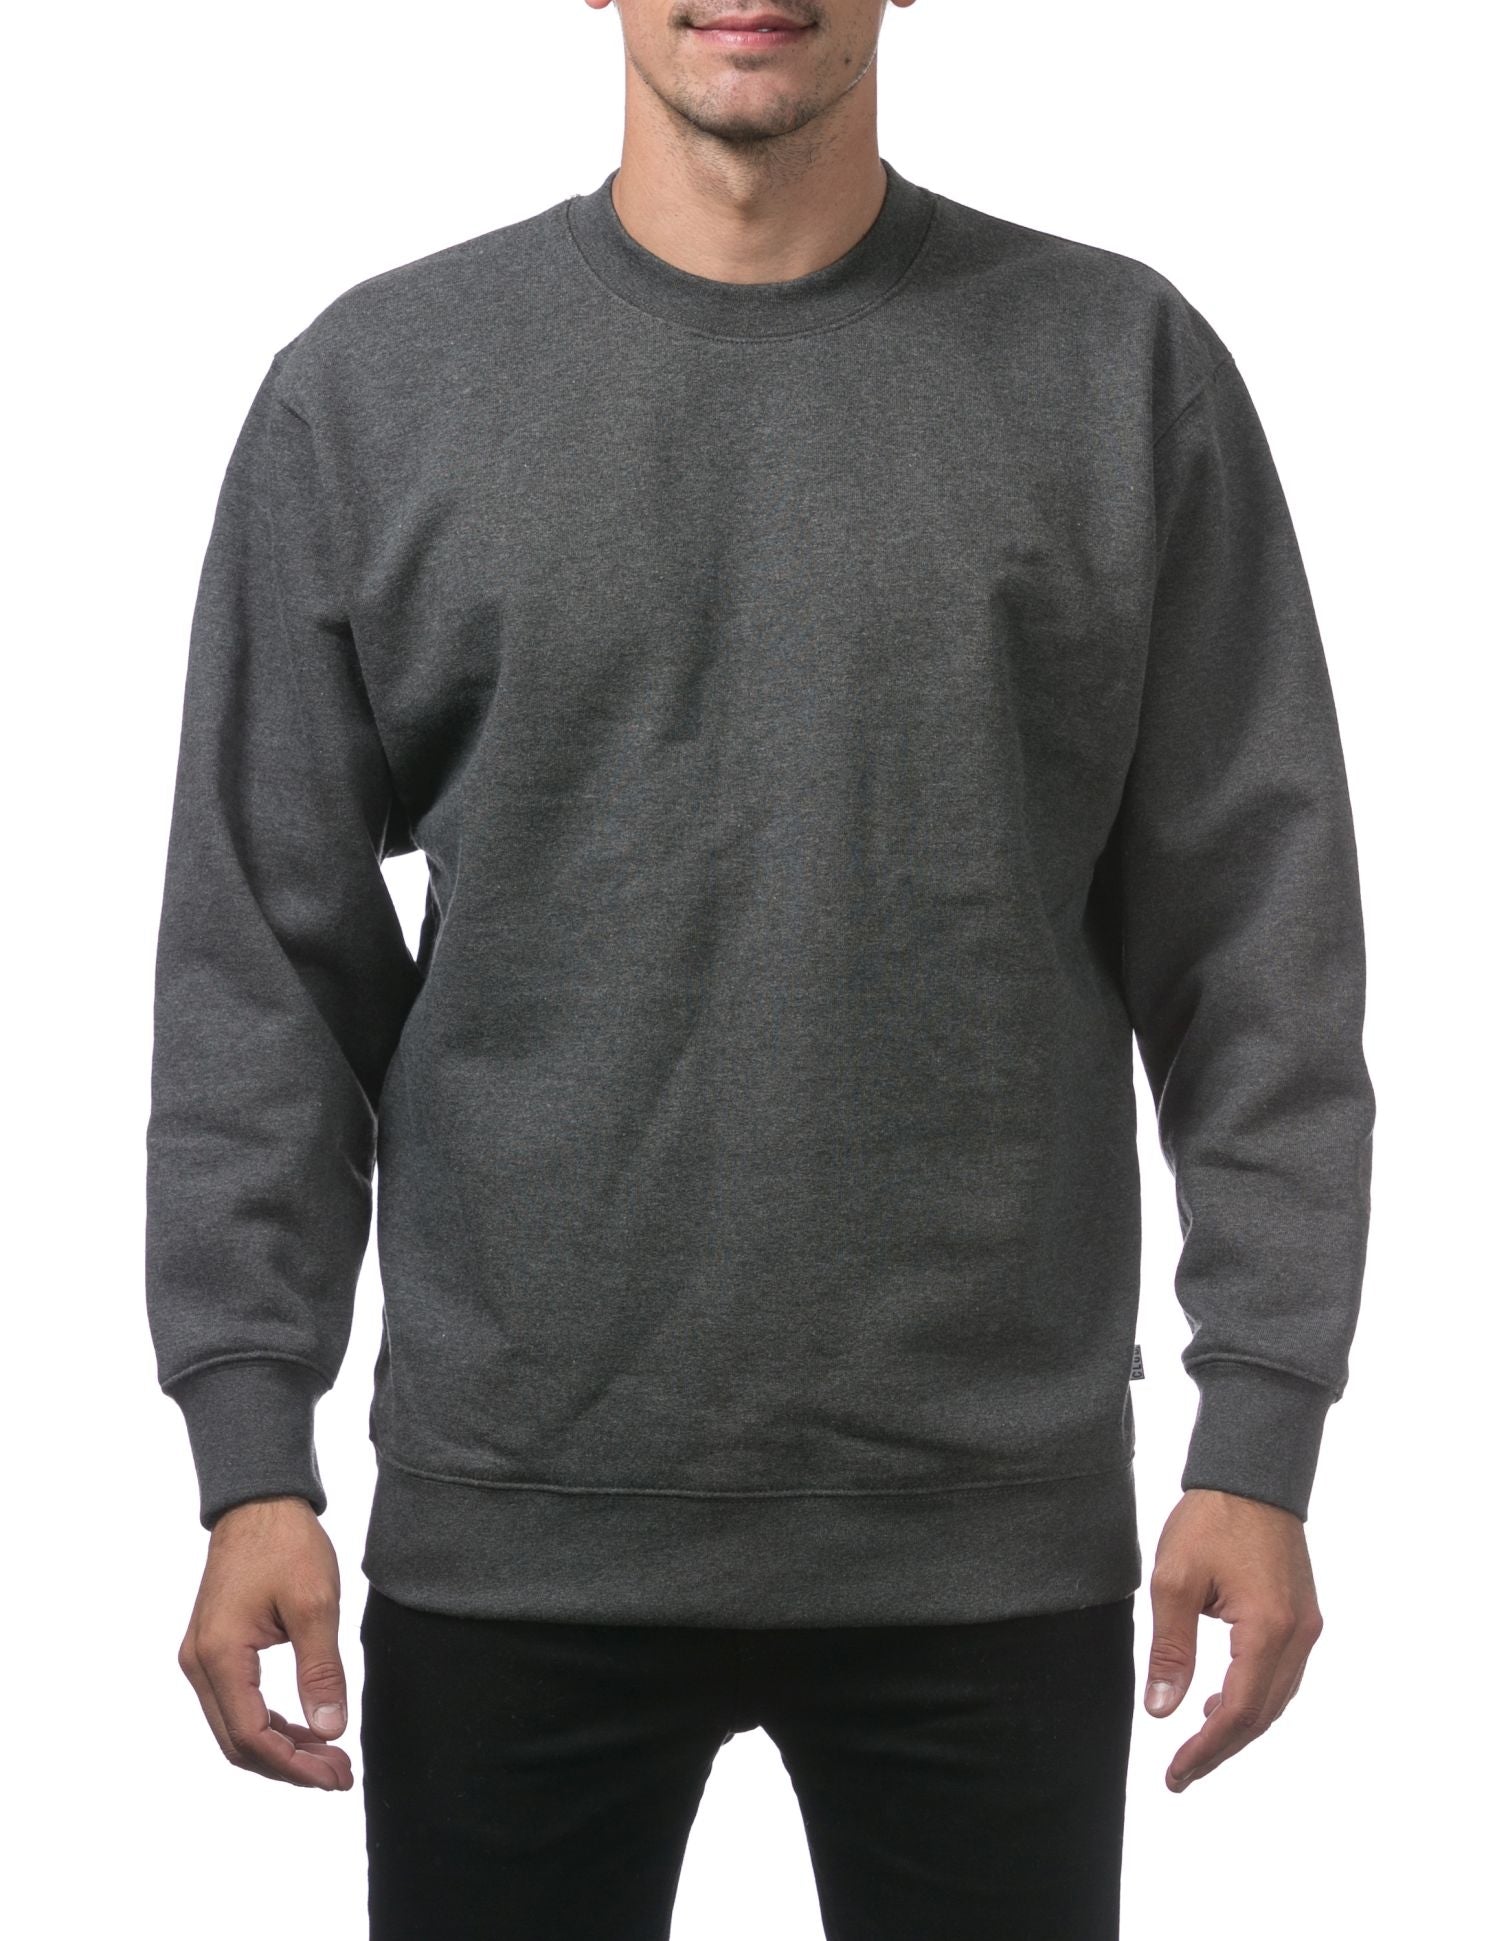 Pro Club Men's Comfort Crew Neck Fleece Pullover Sweater - Charcoal - Large - Pro-Distributing